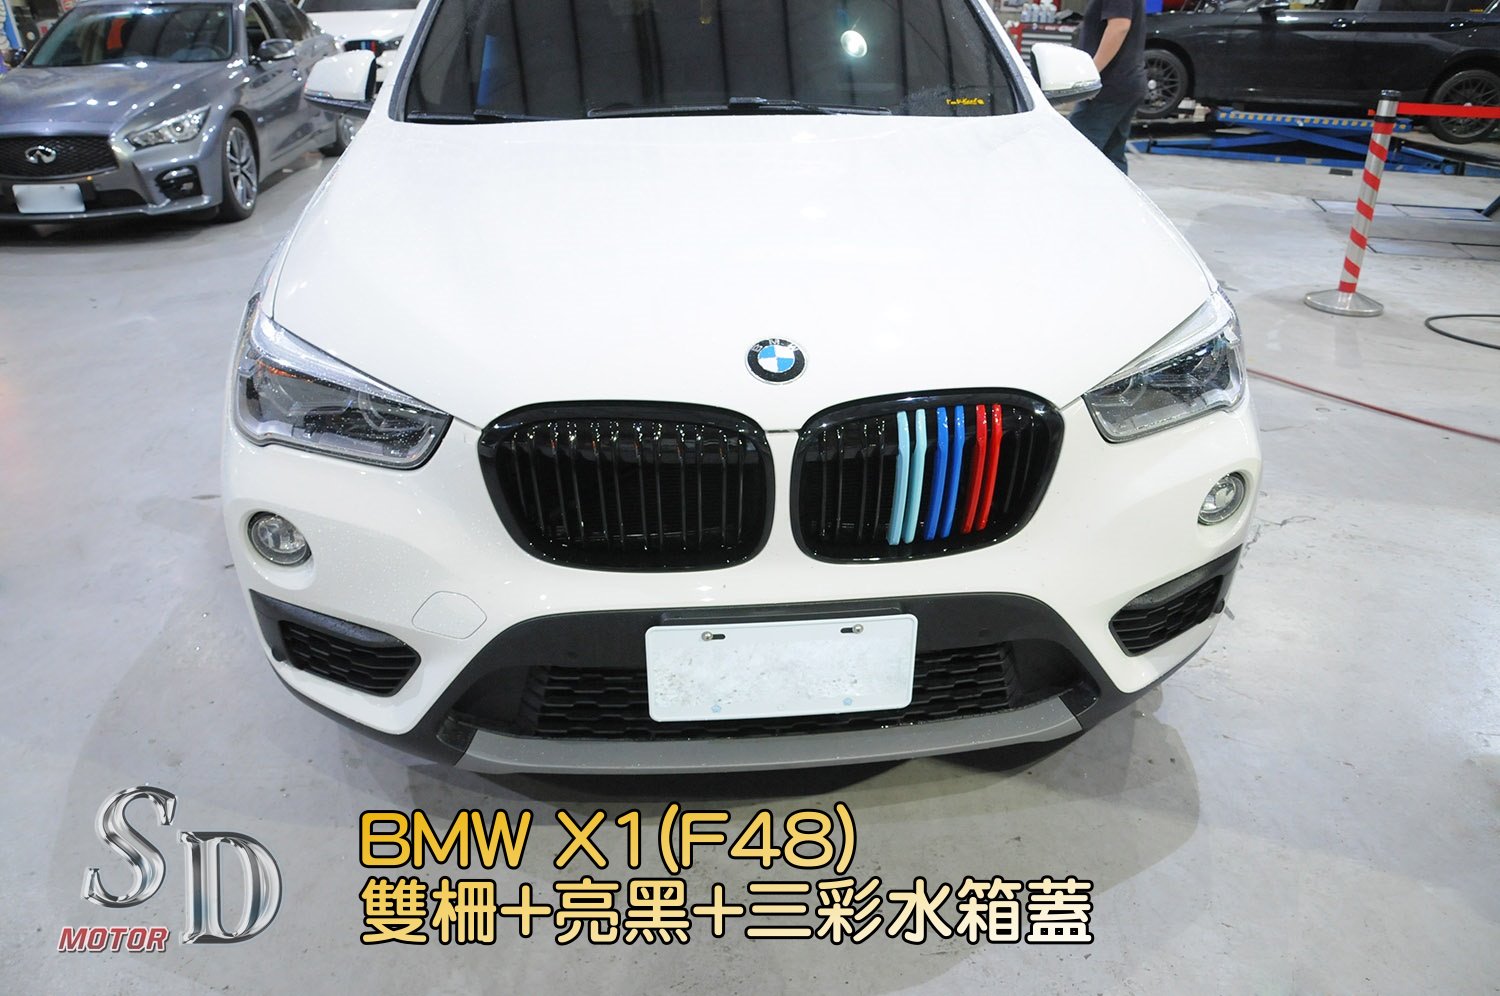 For BMW X1 F48 M款 雙柵+亮黑+三彩 水箱罩 鼻頭